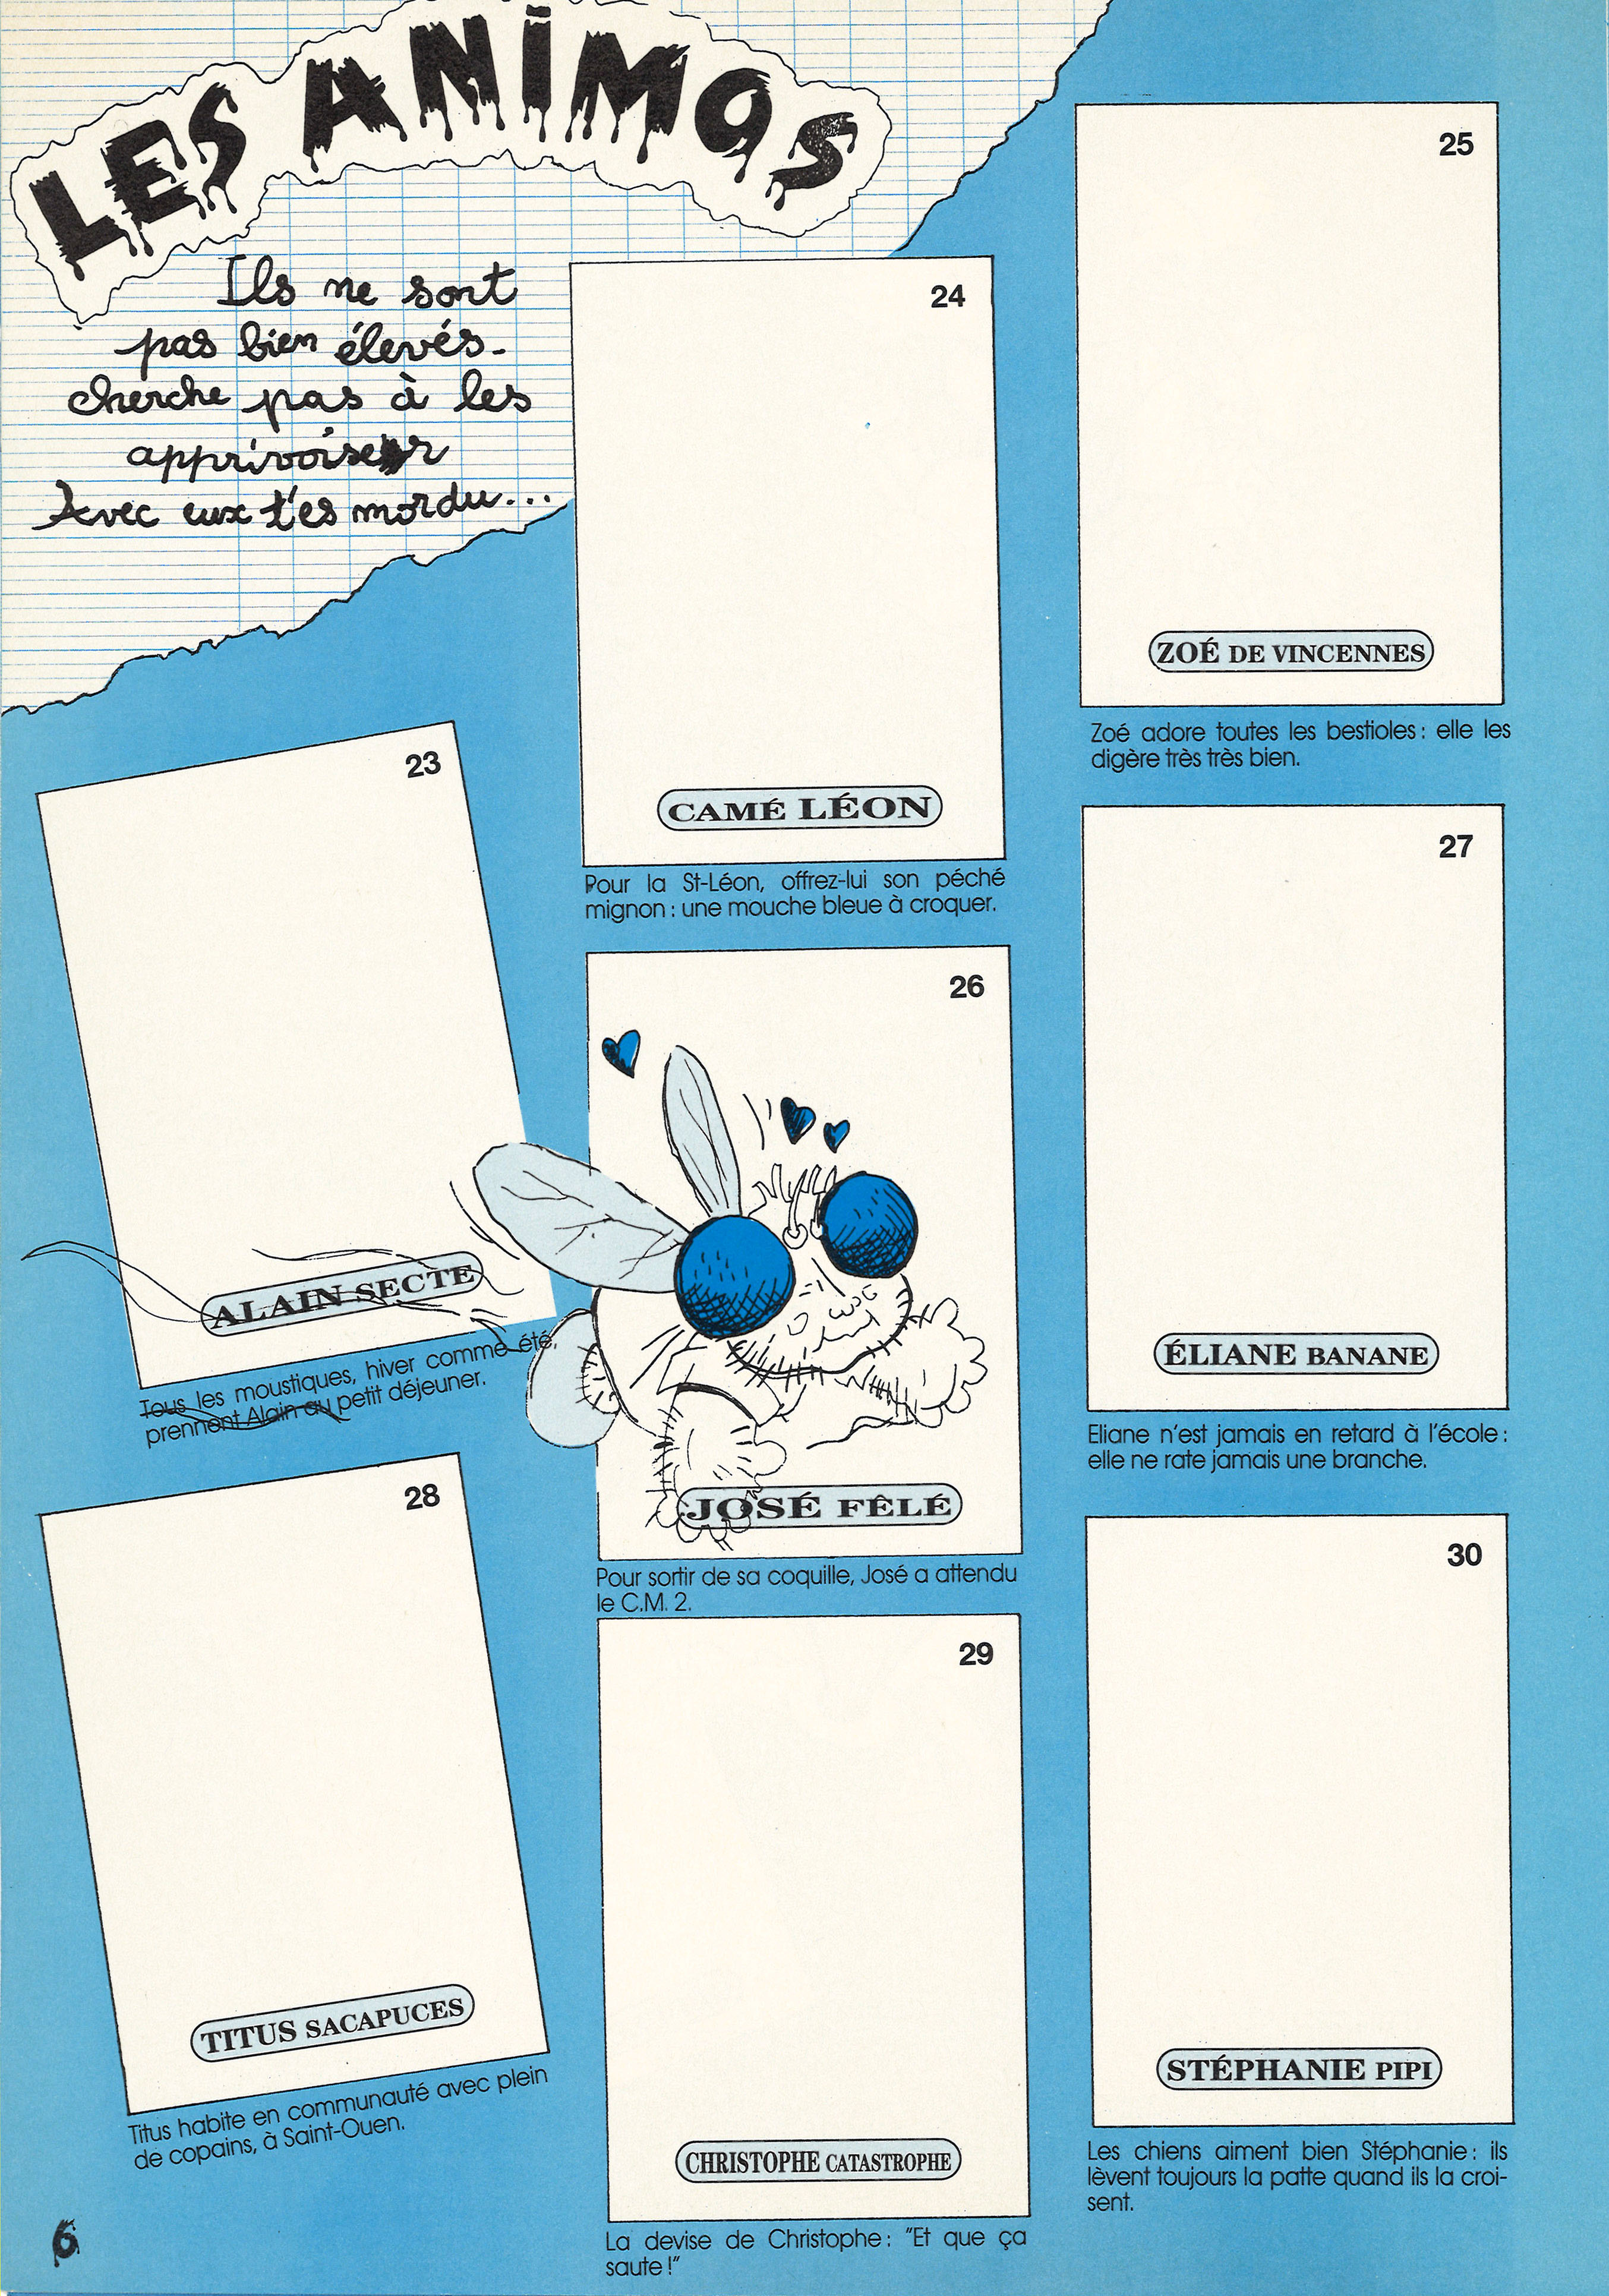 56 idées de Les crados cartes  les crados, cartes, cartes à